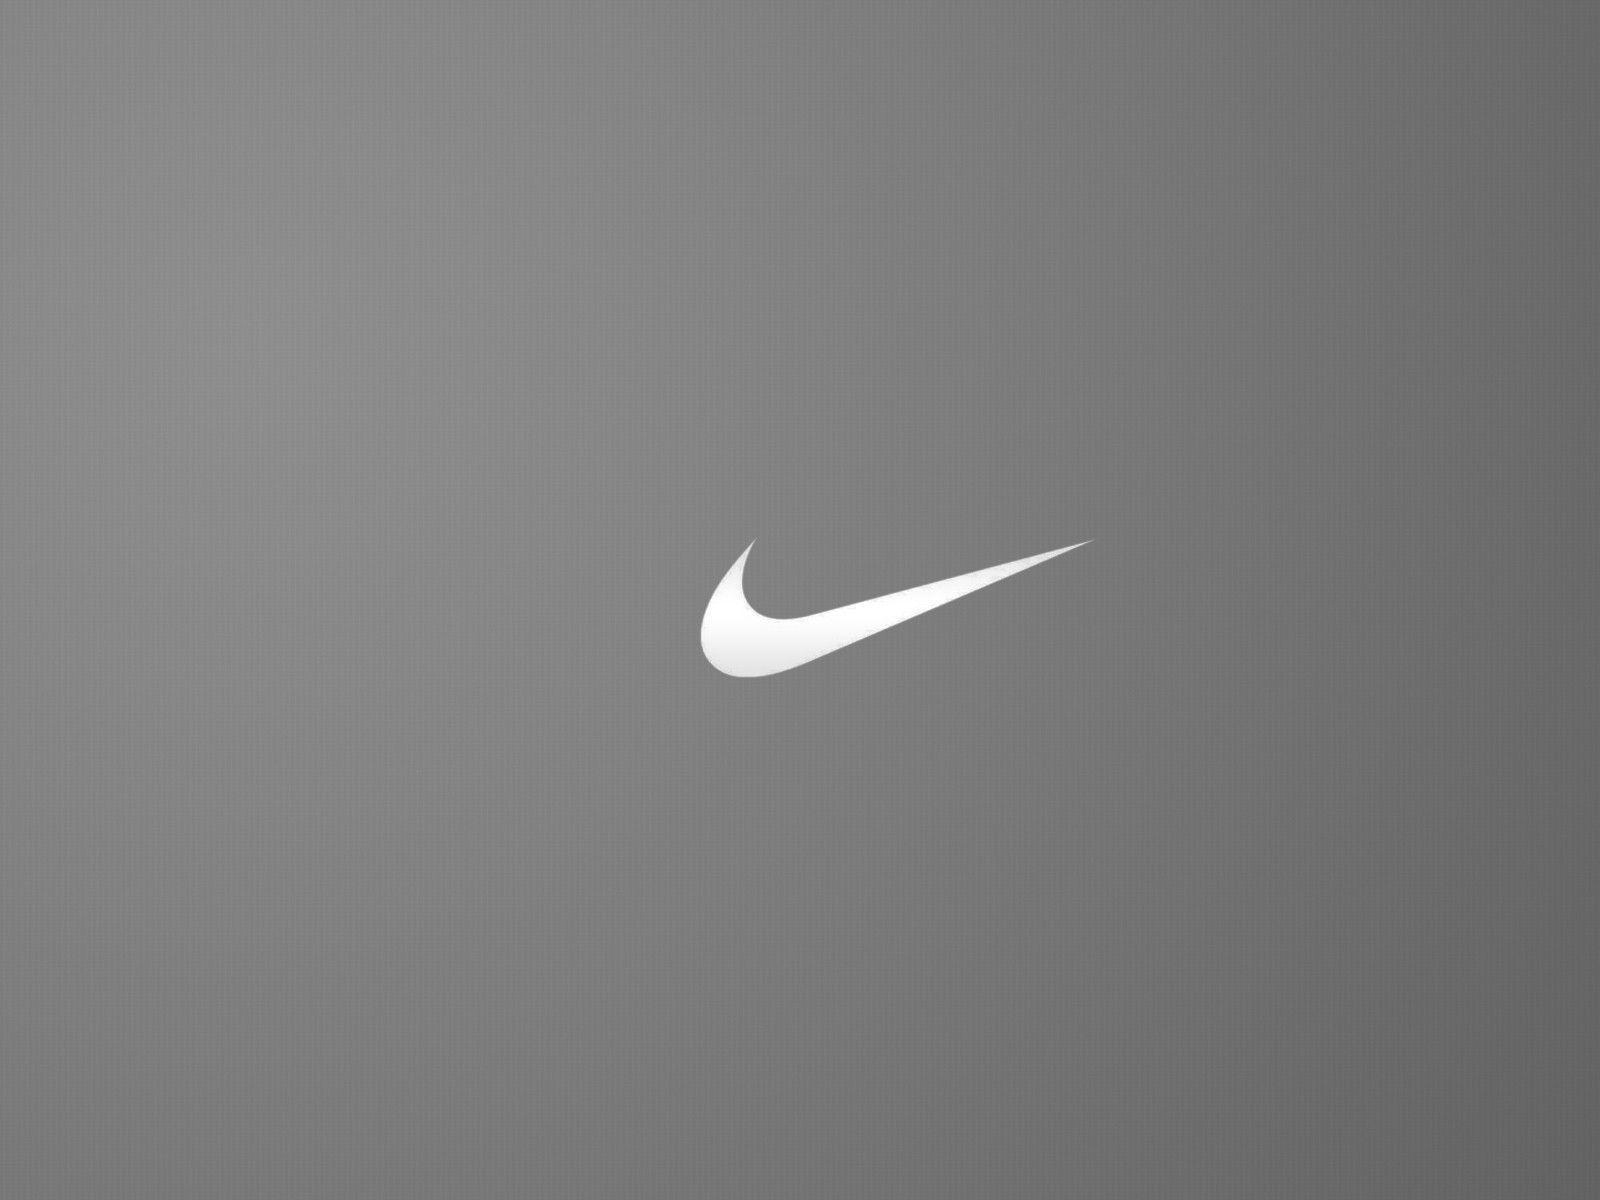 Nike Logo Backgrounds Wallpaper Cave